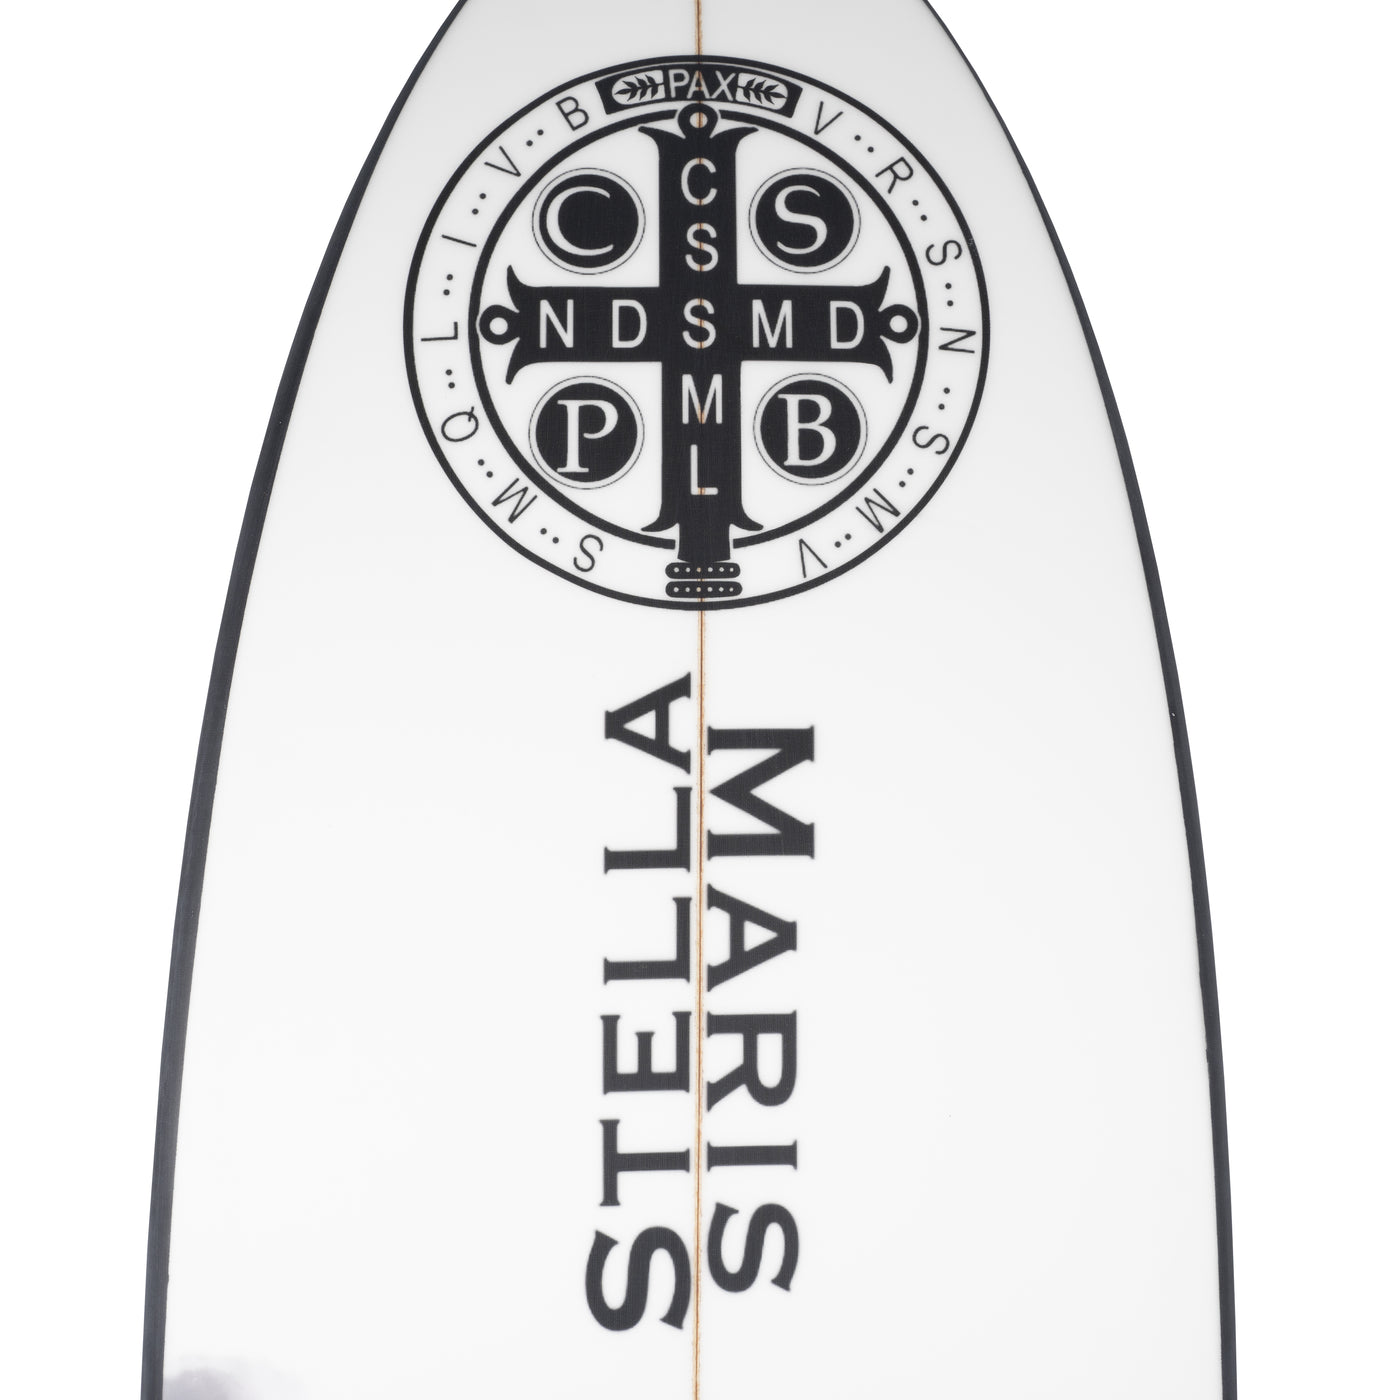 The Stella Maris Surfboard - Hybrid Model*